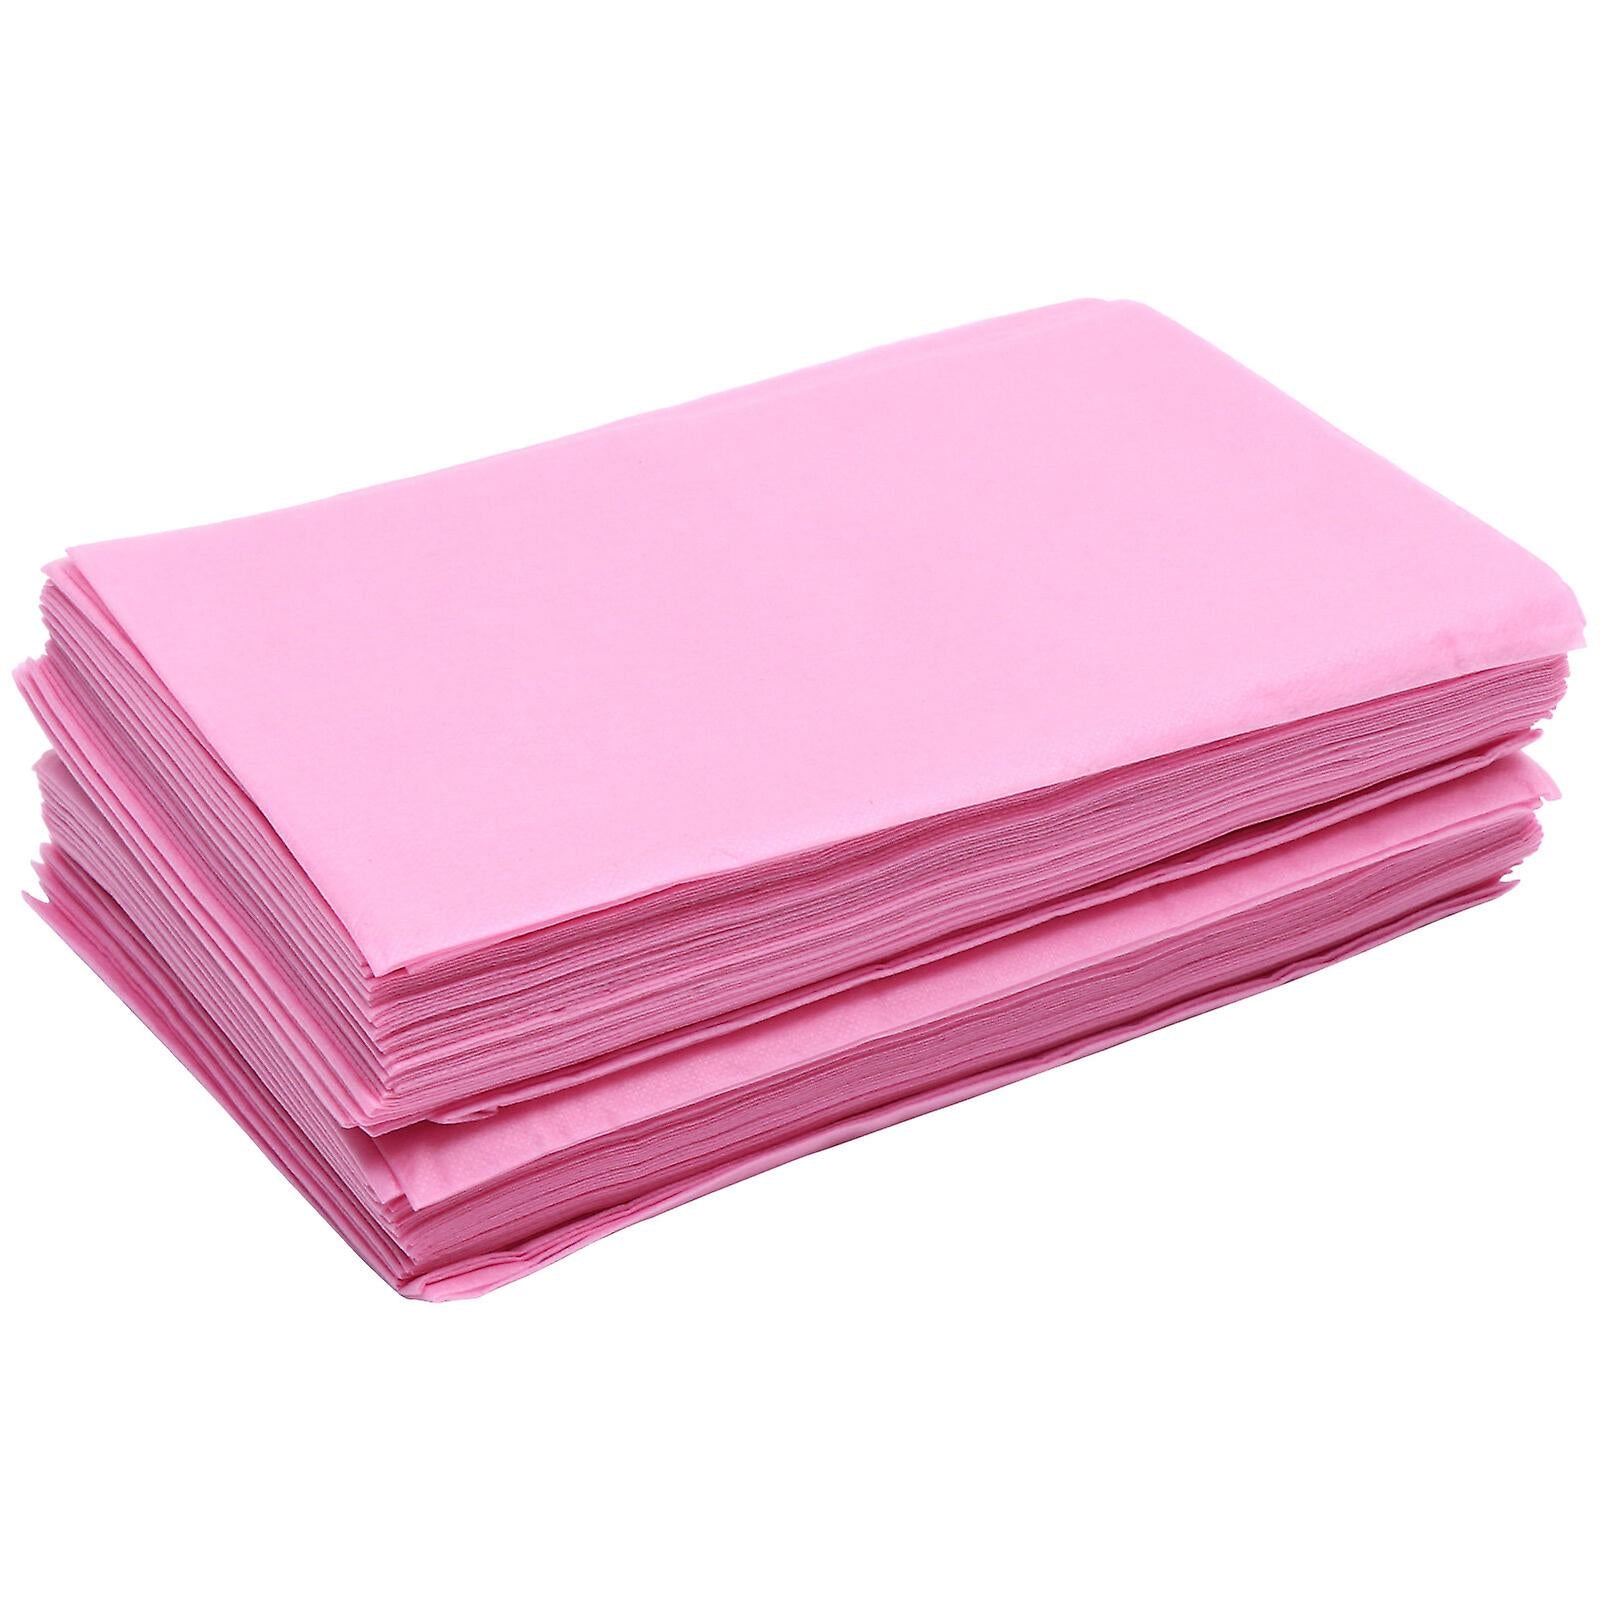 Disposable Non-woven multi purpose sheets | Pink 100's